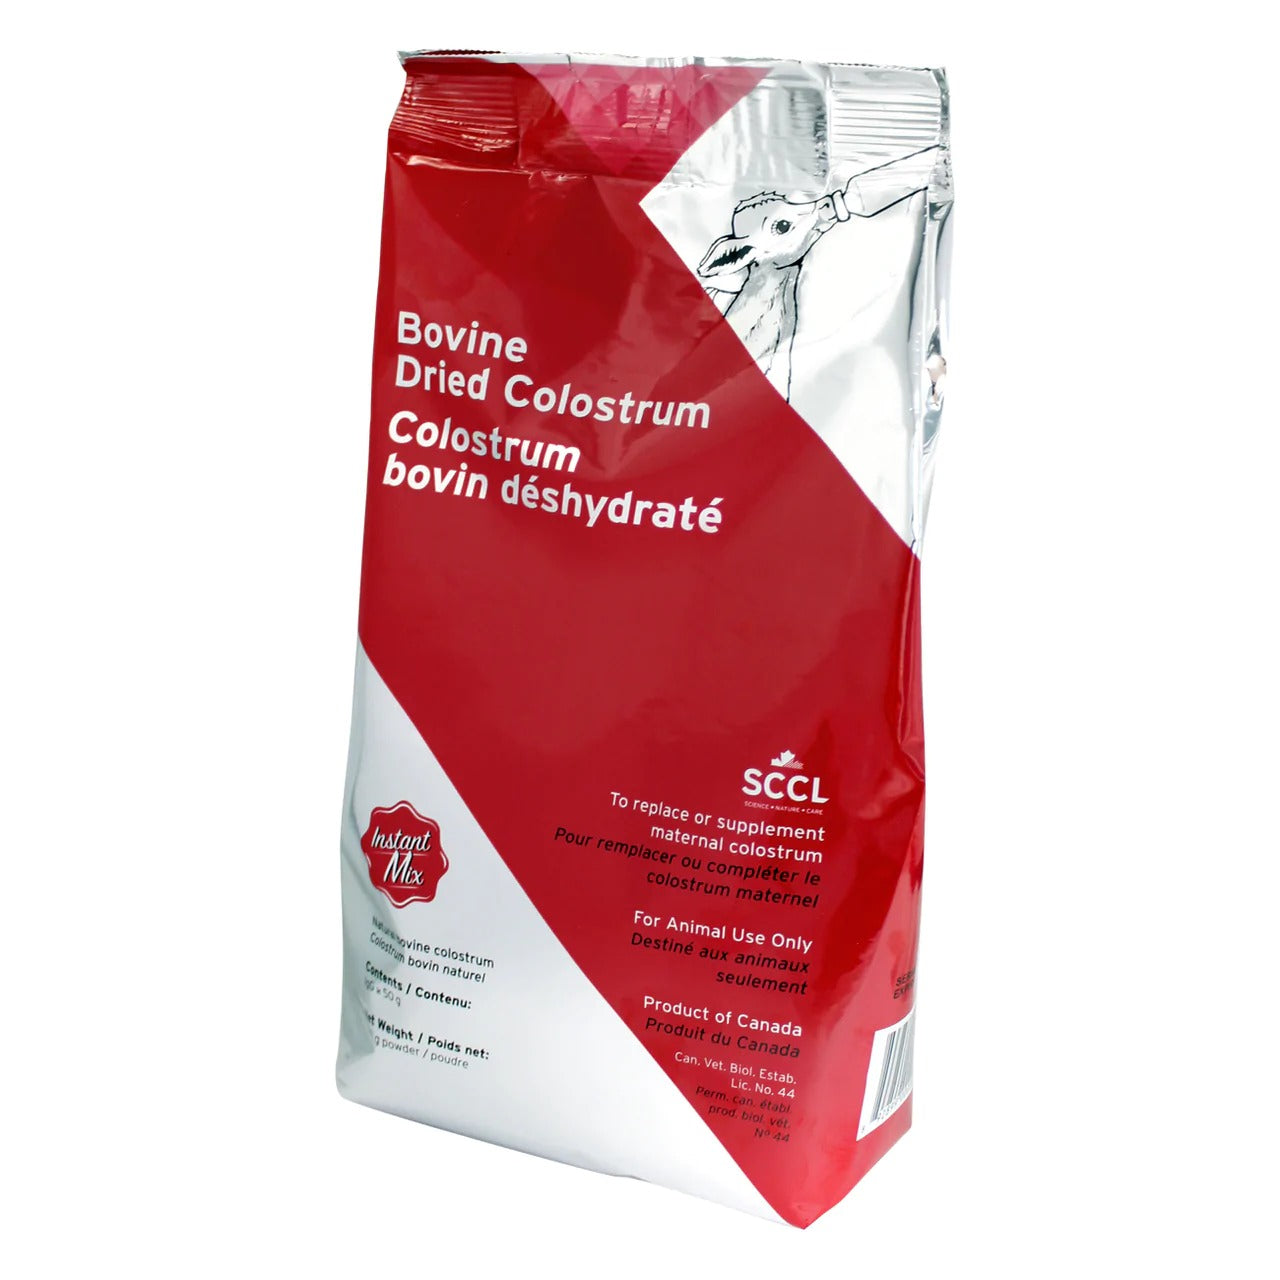 SCC  Bovine Dried Colostrum Instant Mix 350gms